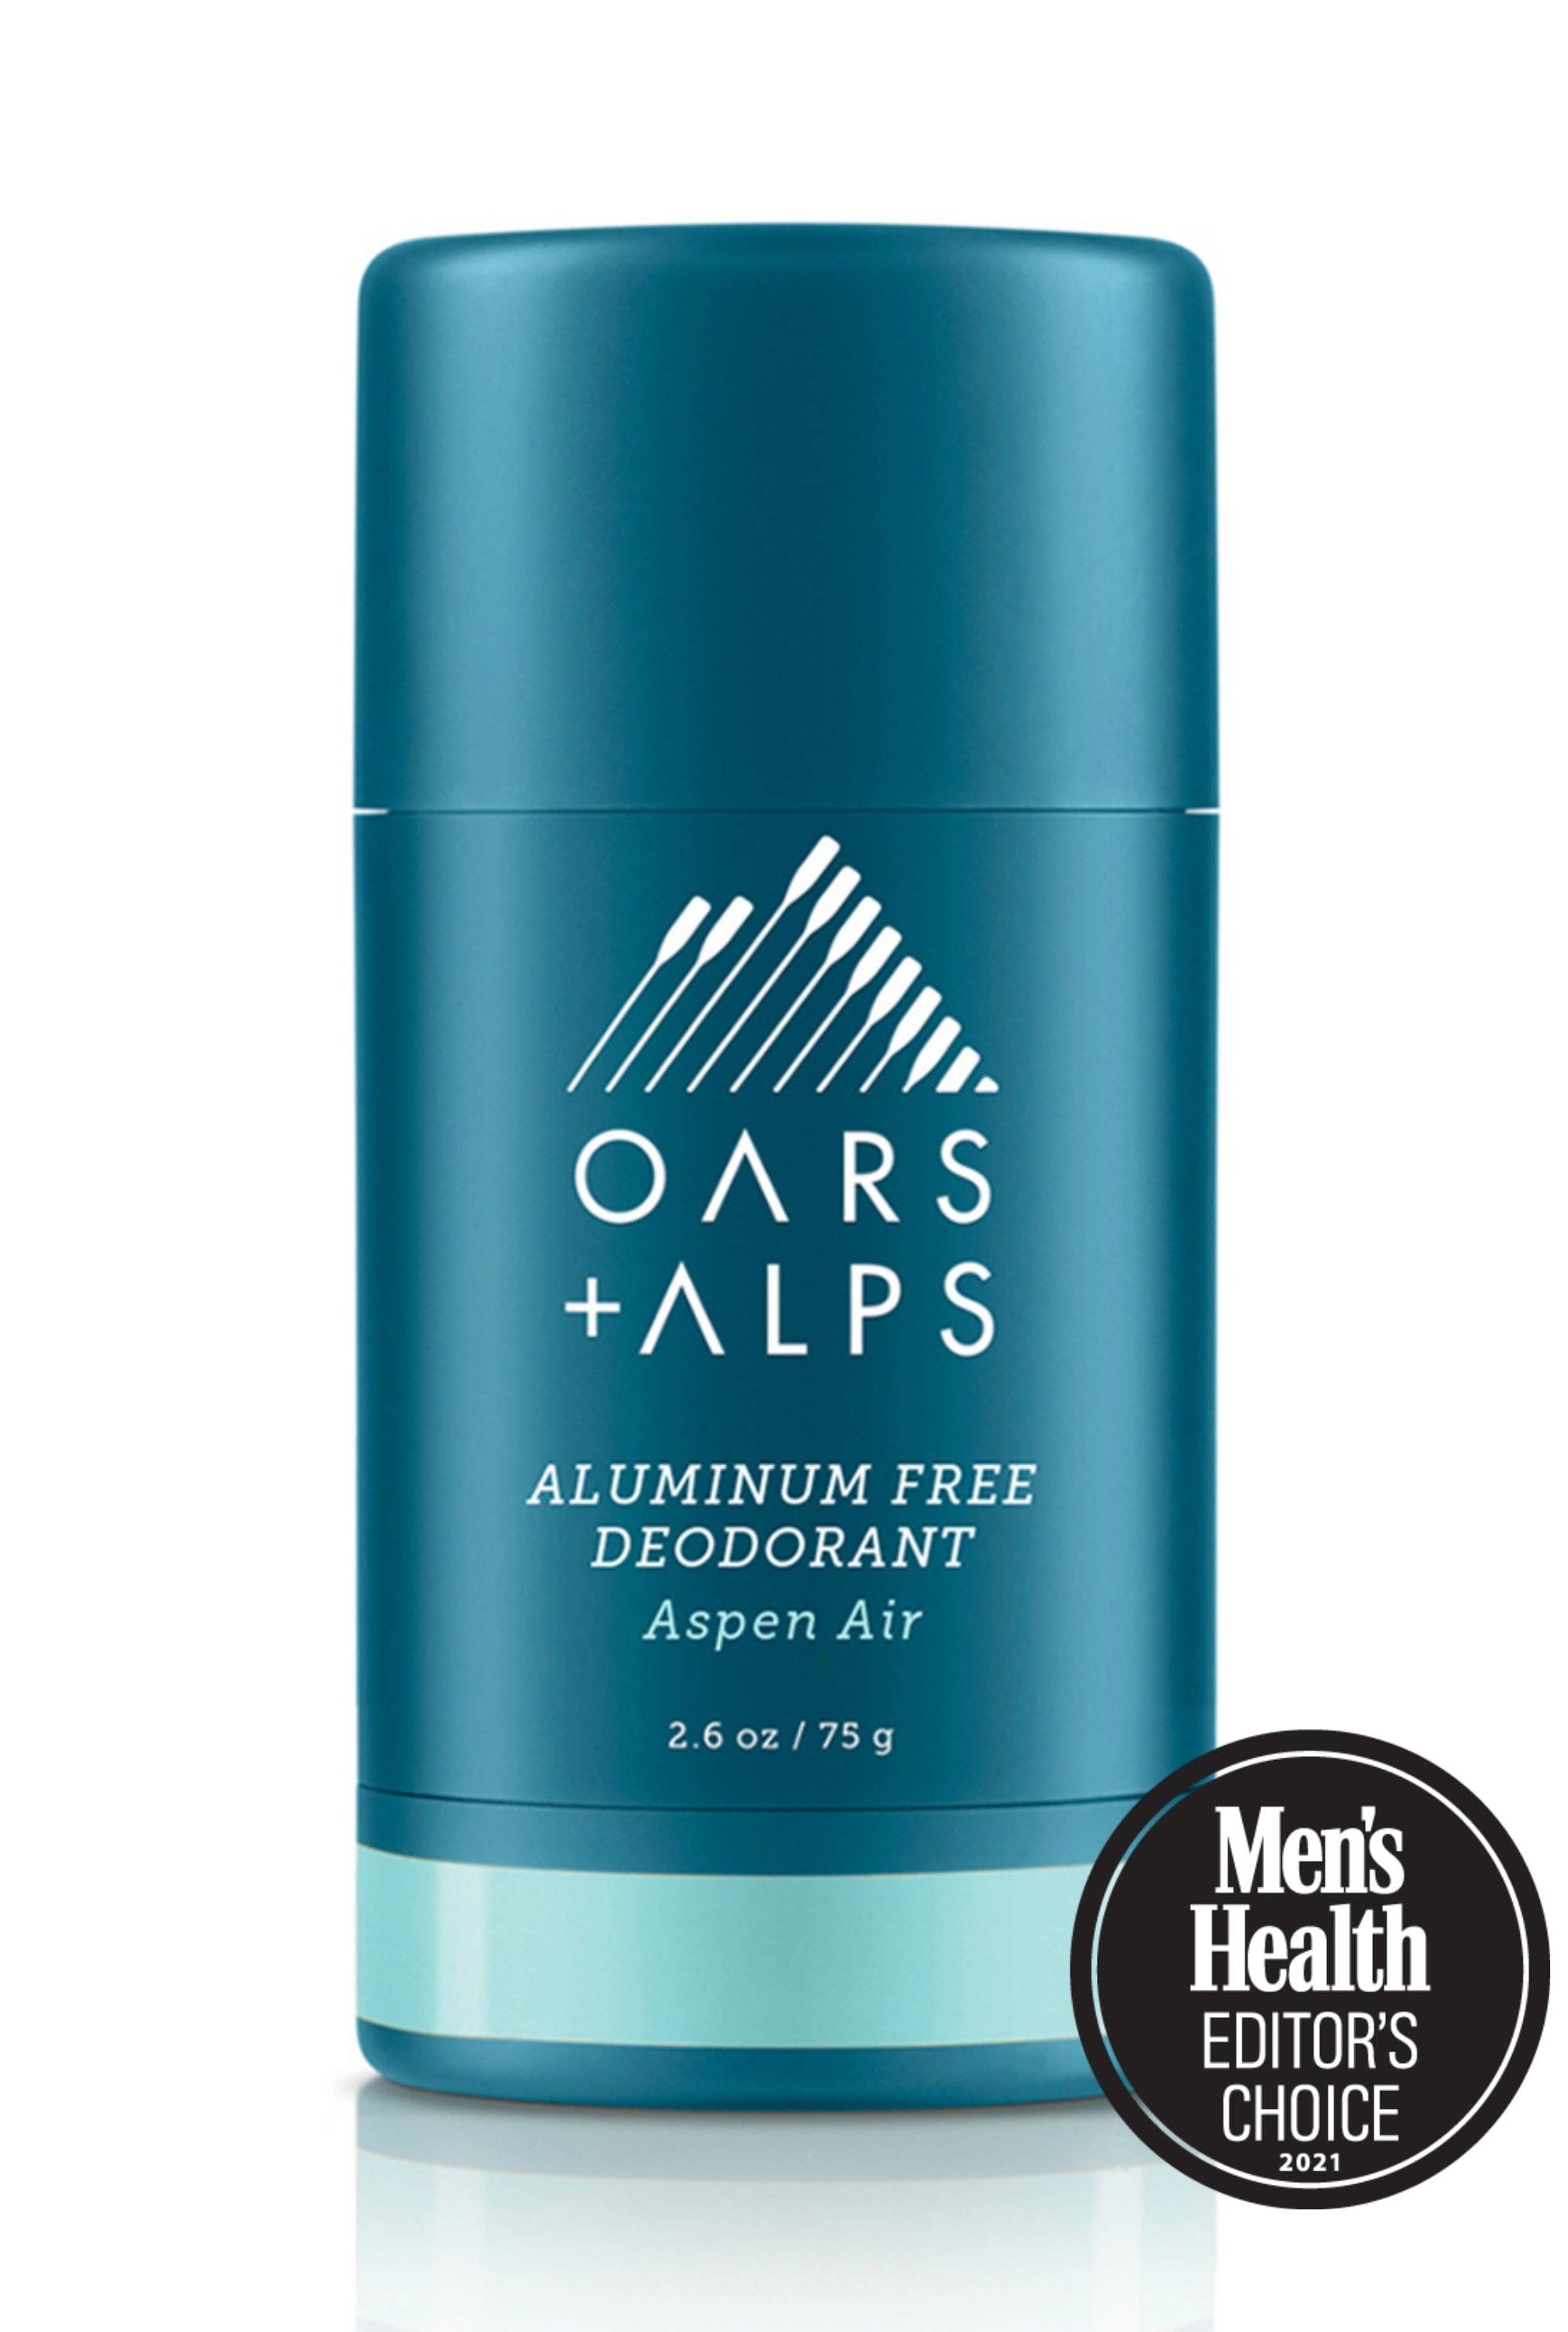 Aluminum Free Deodorant, Clean Ingredients - Aspen Air Oars and Alps